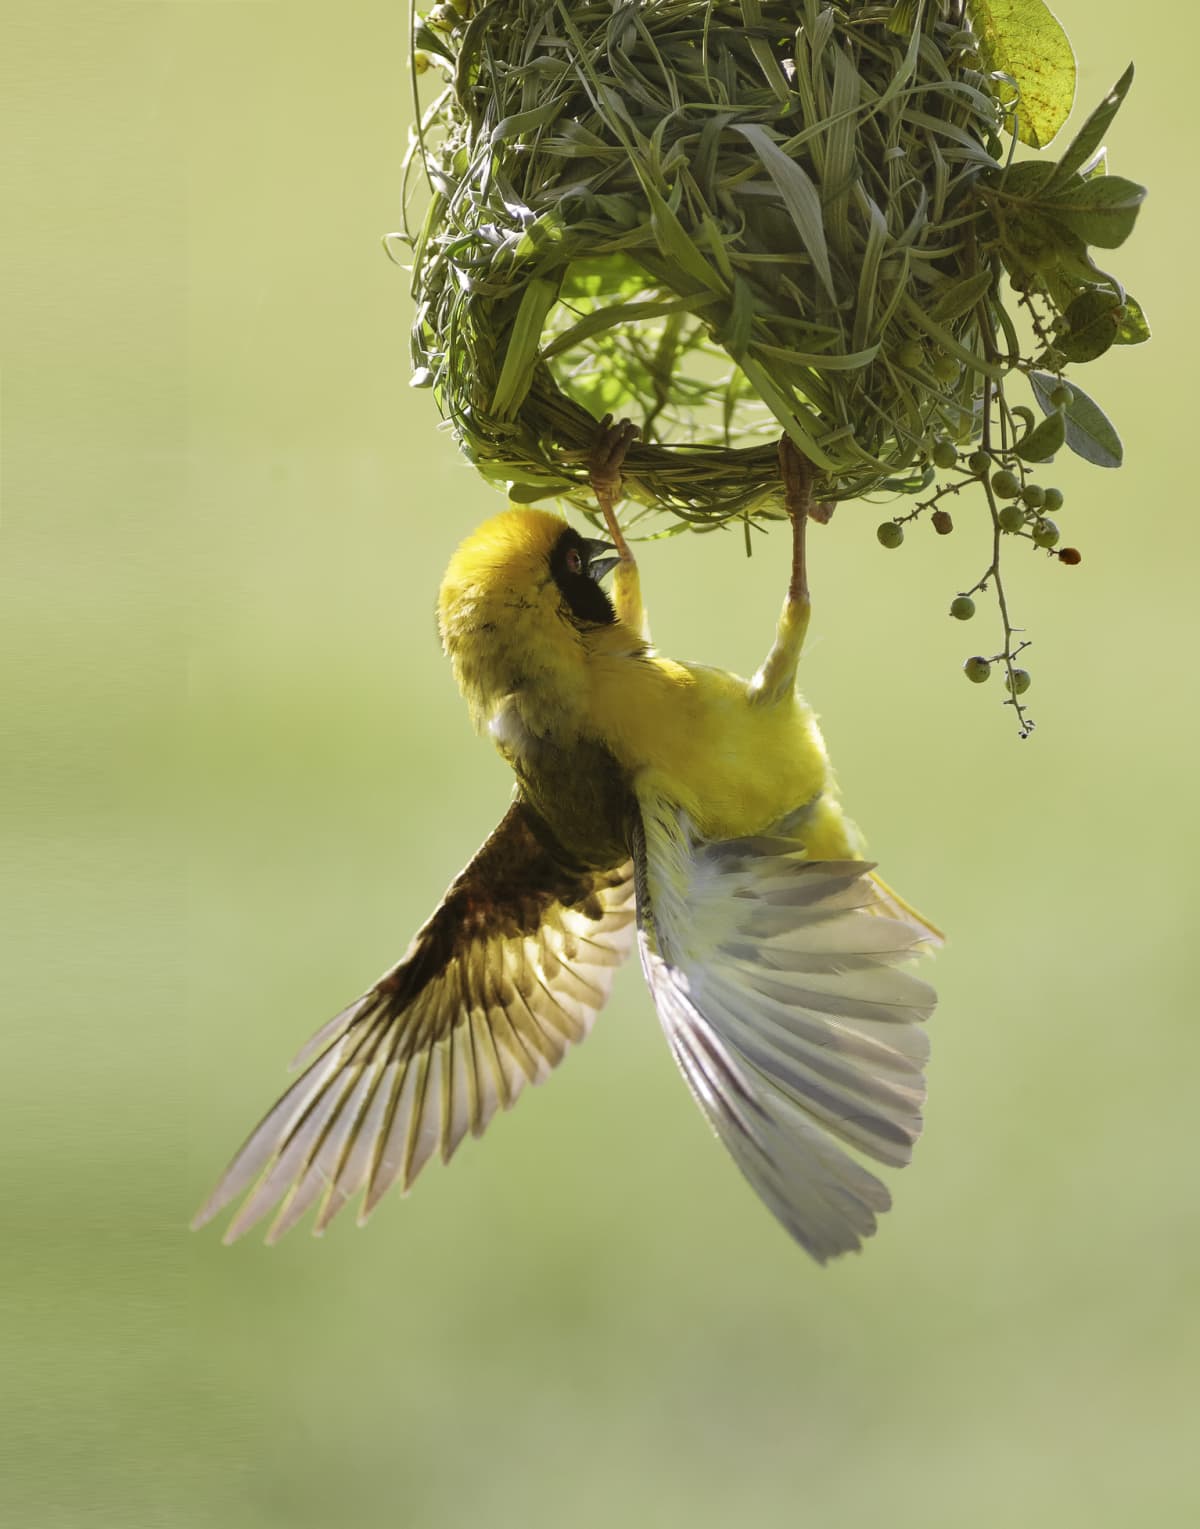 Yellow weaver bird hanging from its nest